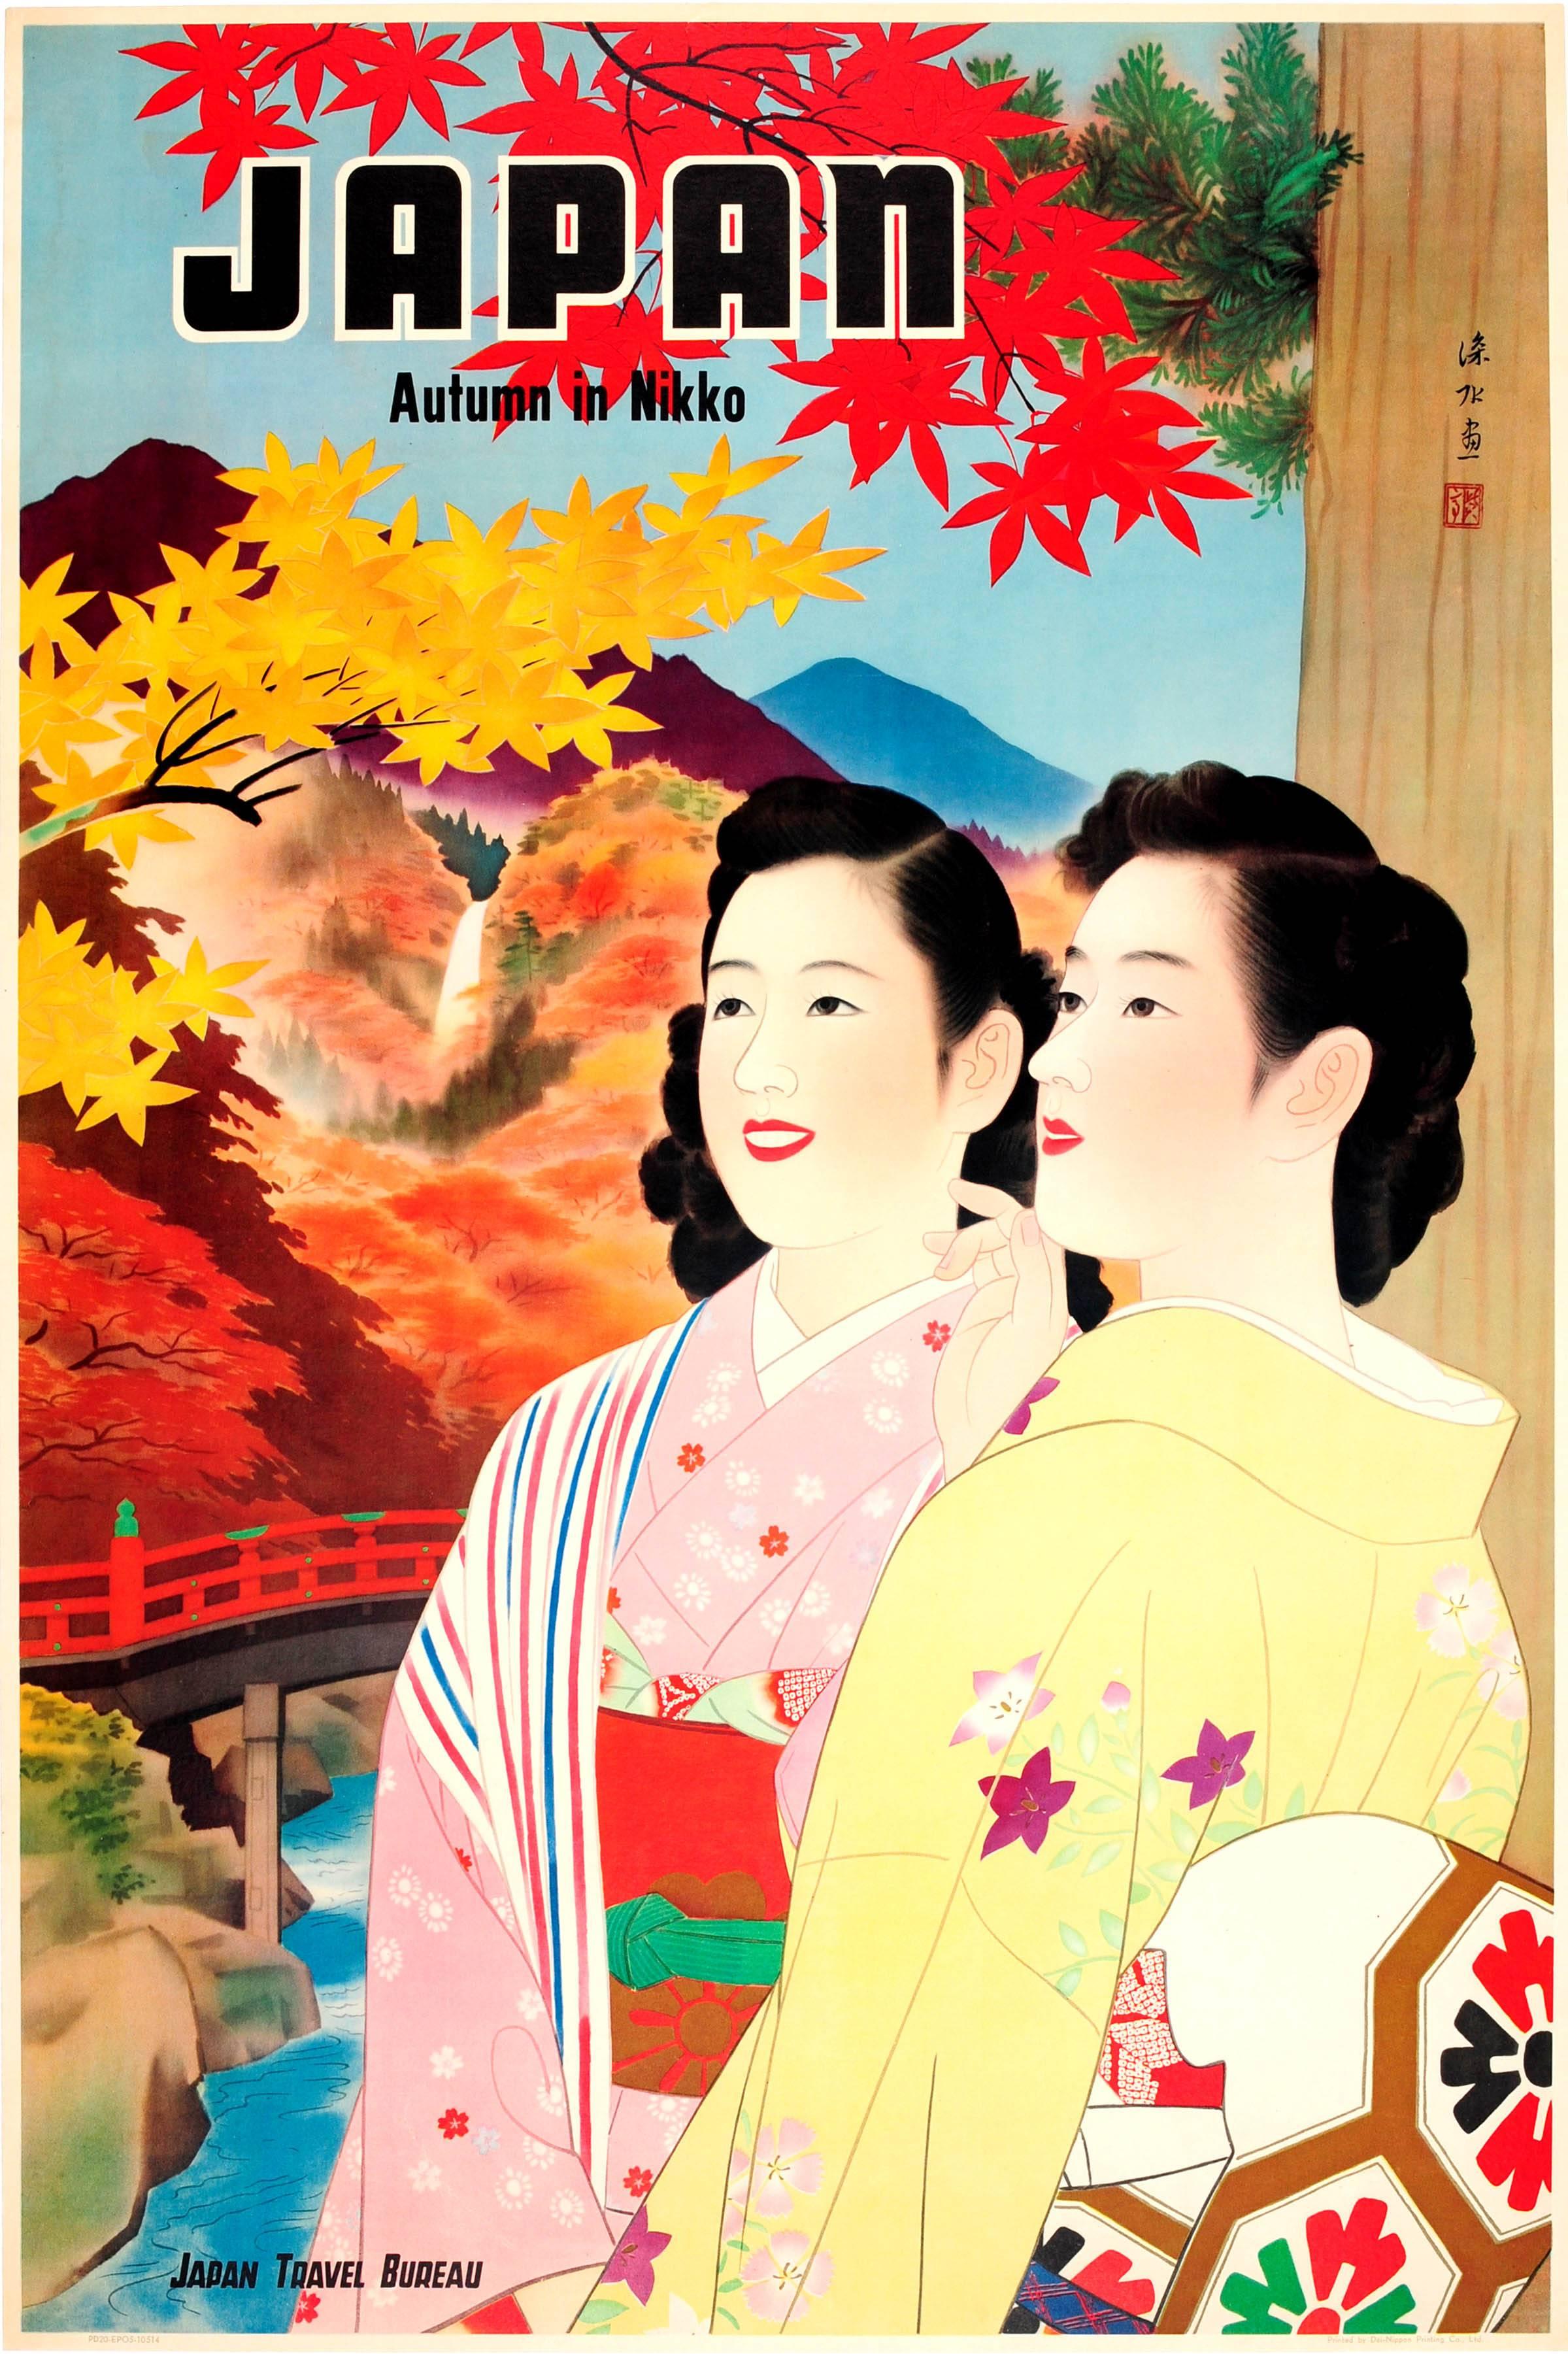 Original Vintage 1930s Travel Advertising Poster For Japan - Autumn In Nikko